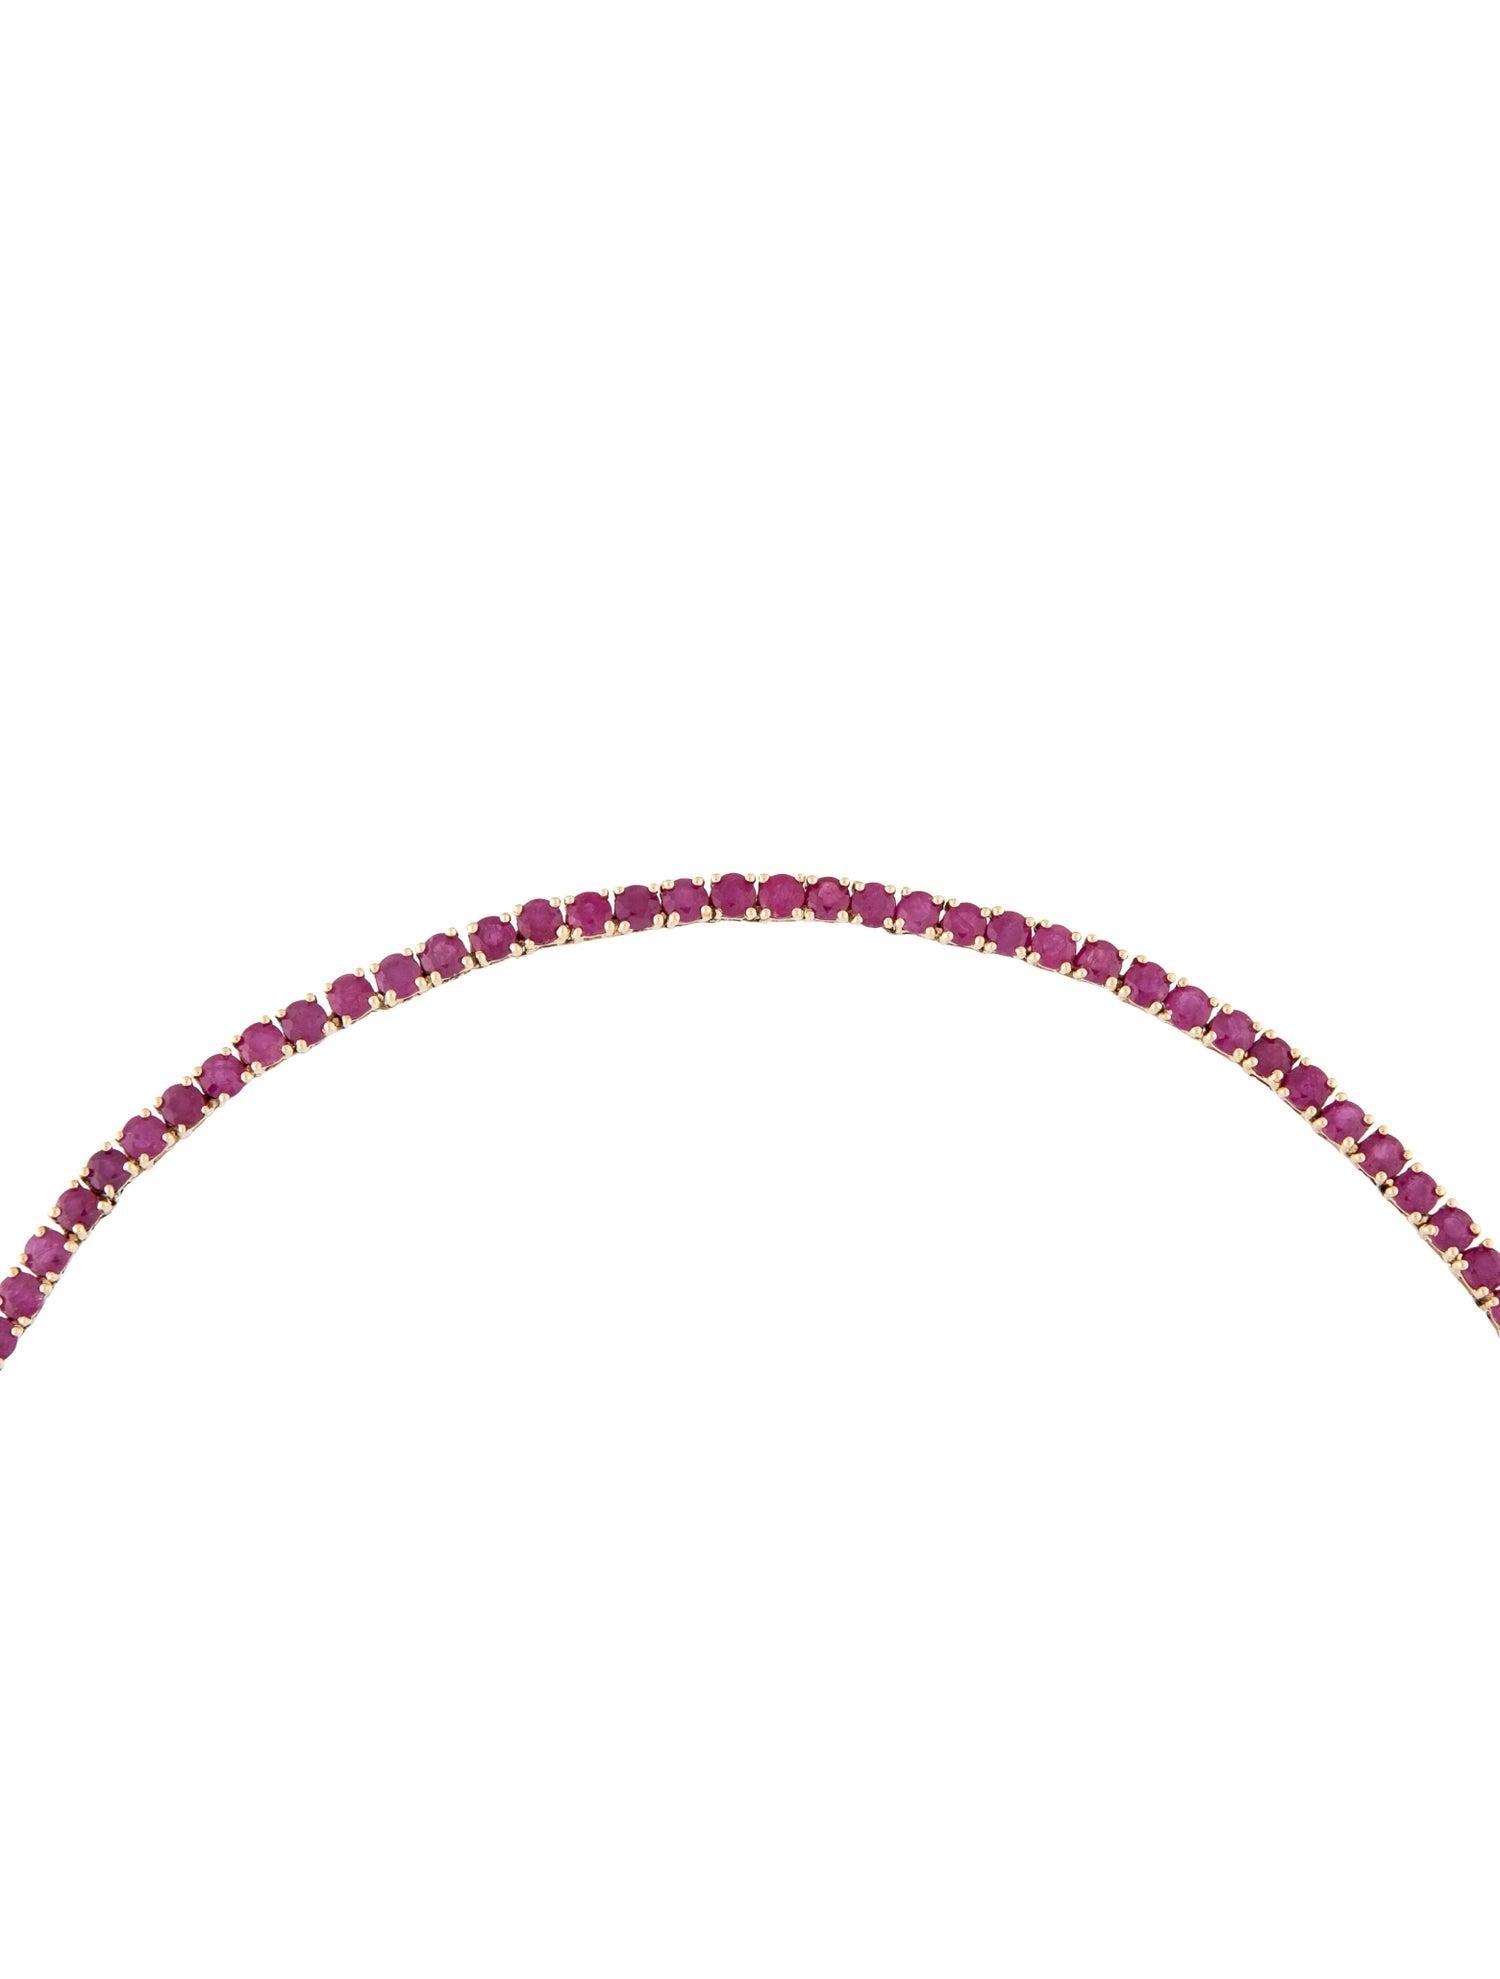 Women's Luxury 14K 10.17ctw Ruby Collar Necklace - Exquisite Gemstone Statement Piece For Sale